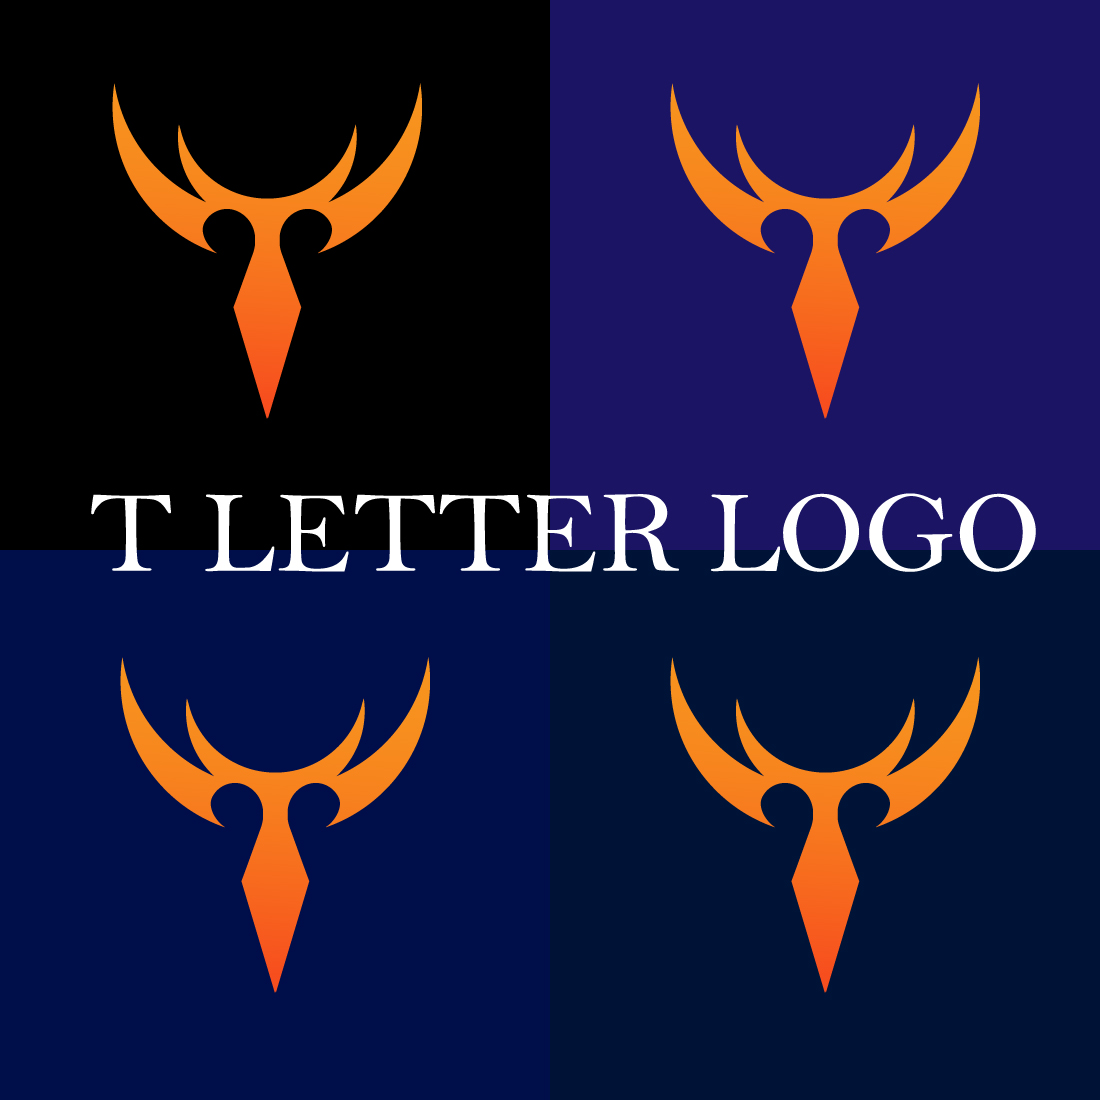 T Letter Deer Head Logo Design cover image.